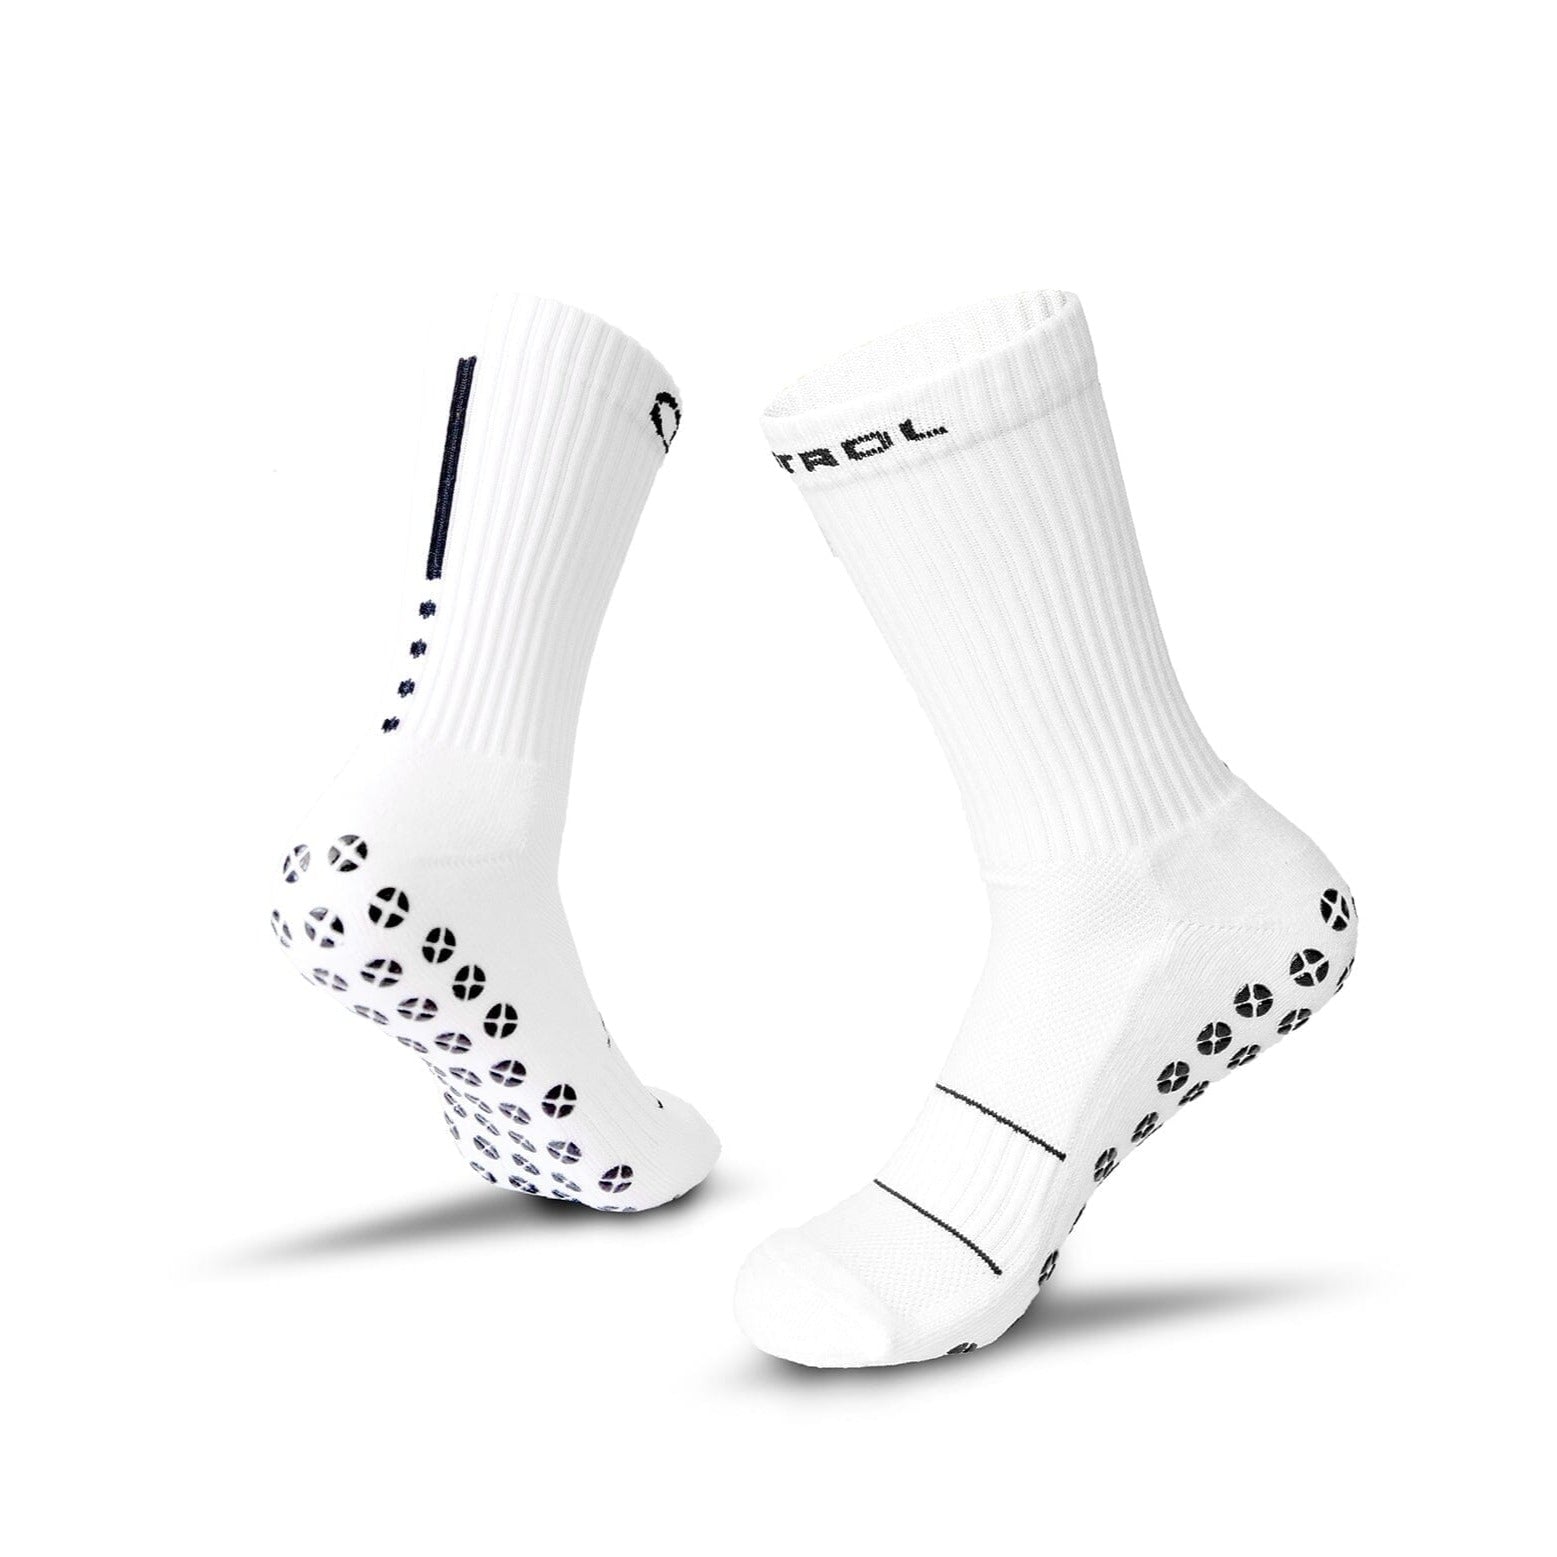 Control Sox 2.0 Grip Socks Control Sox S/M (US 5-8.5) Limited Edition 